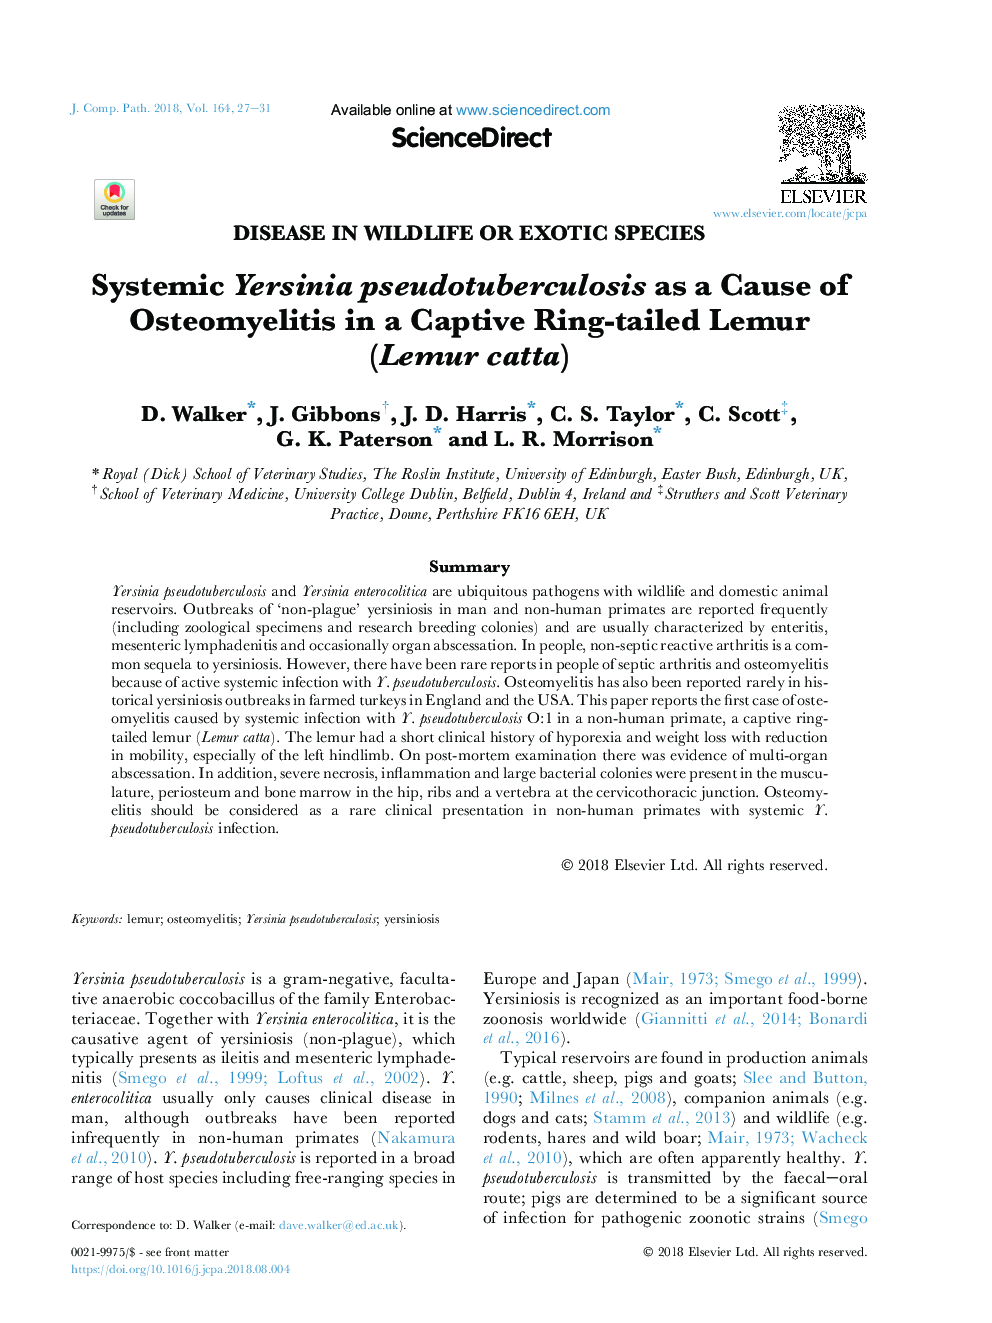 Systemic Yersinia pseudotuberculosis as a Cause of Osteomyelitis in a Captive Ring-tailed Lemur (Lemur catta)